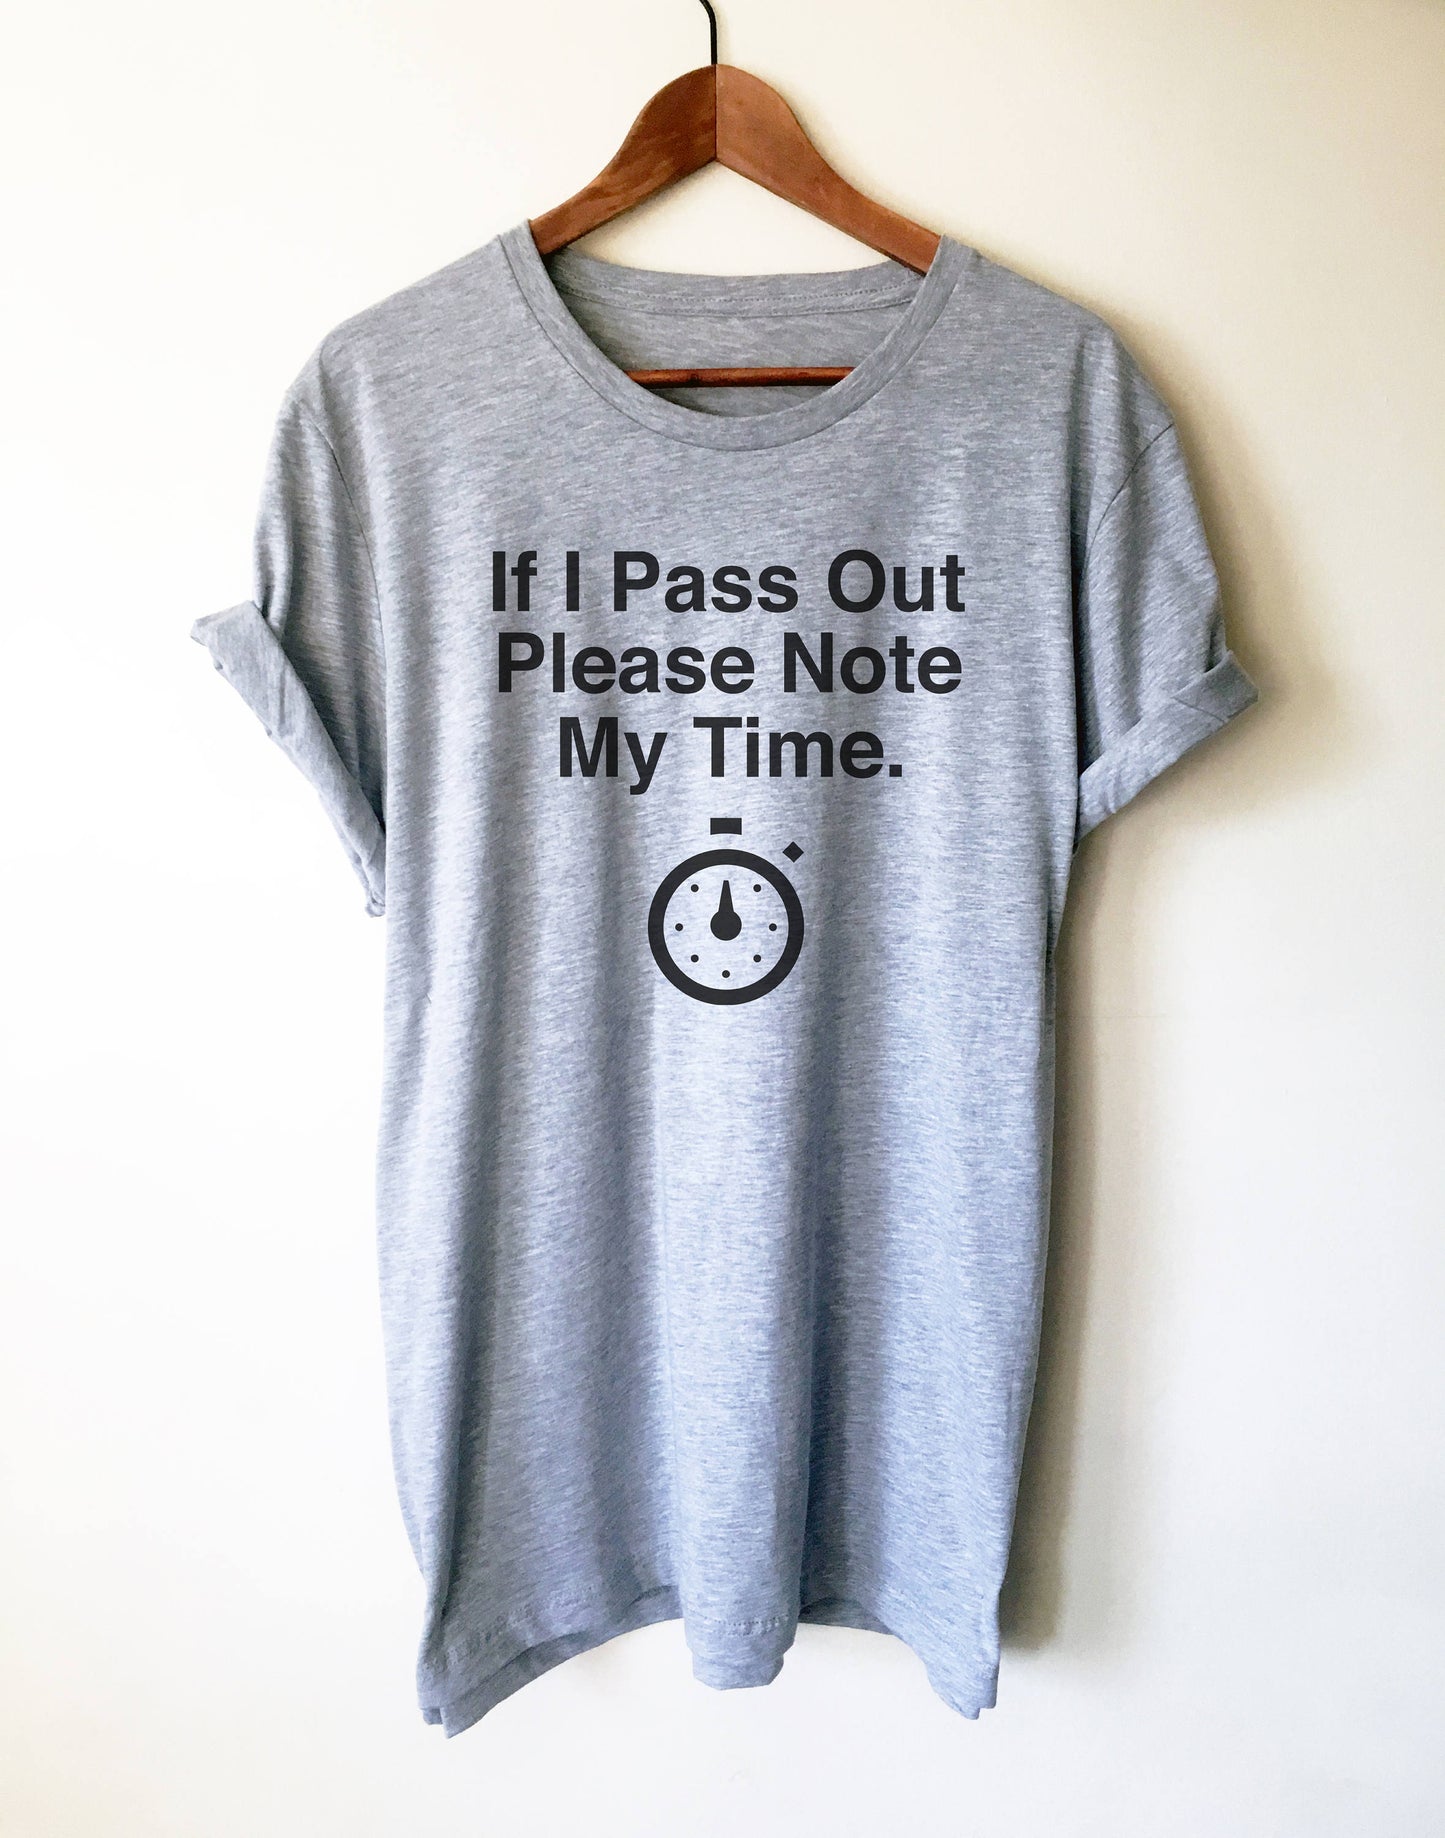 If I Pass Out Please Note My Time Unisex Shirt - Running shirt, Marathon shirt, Funny running shirt, Marathon shirts, Half marathon